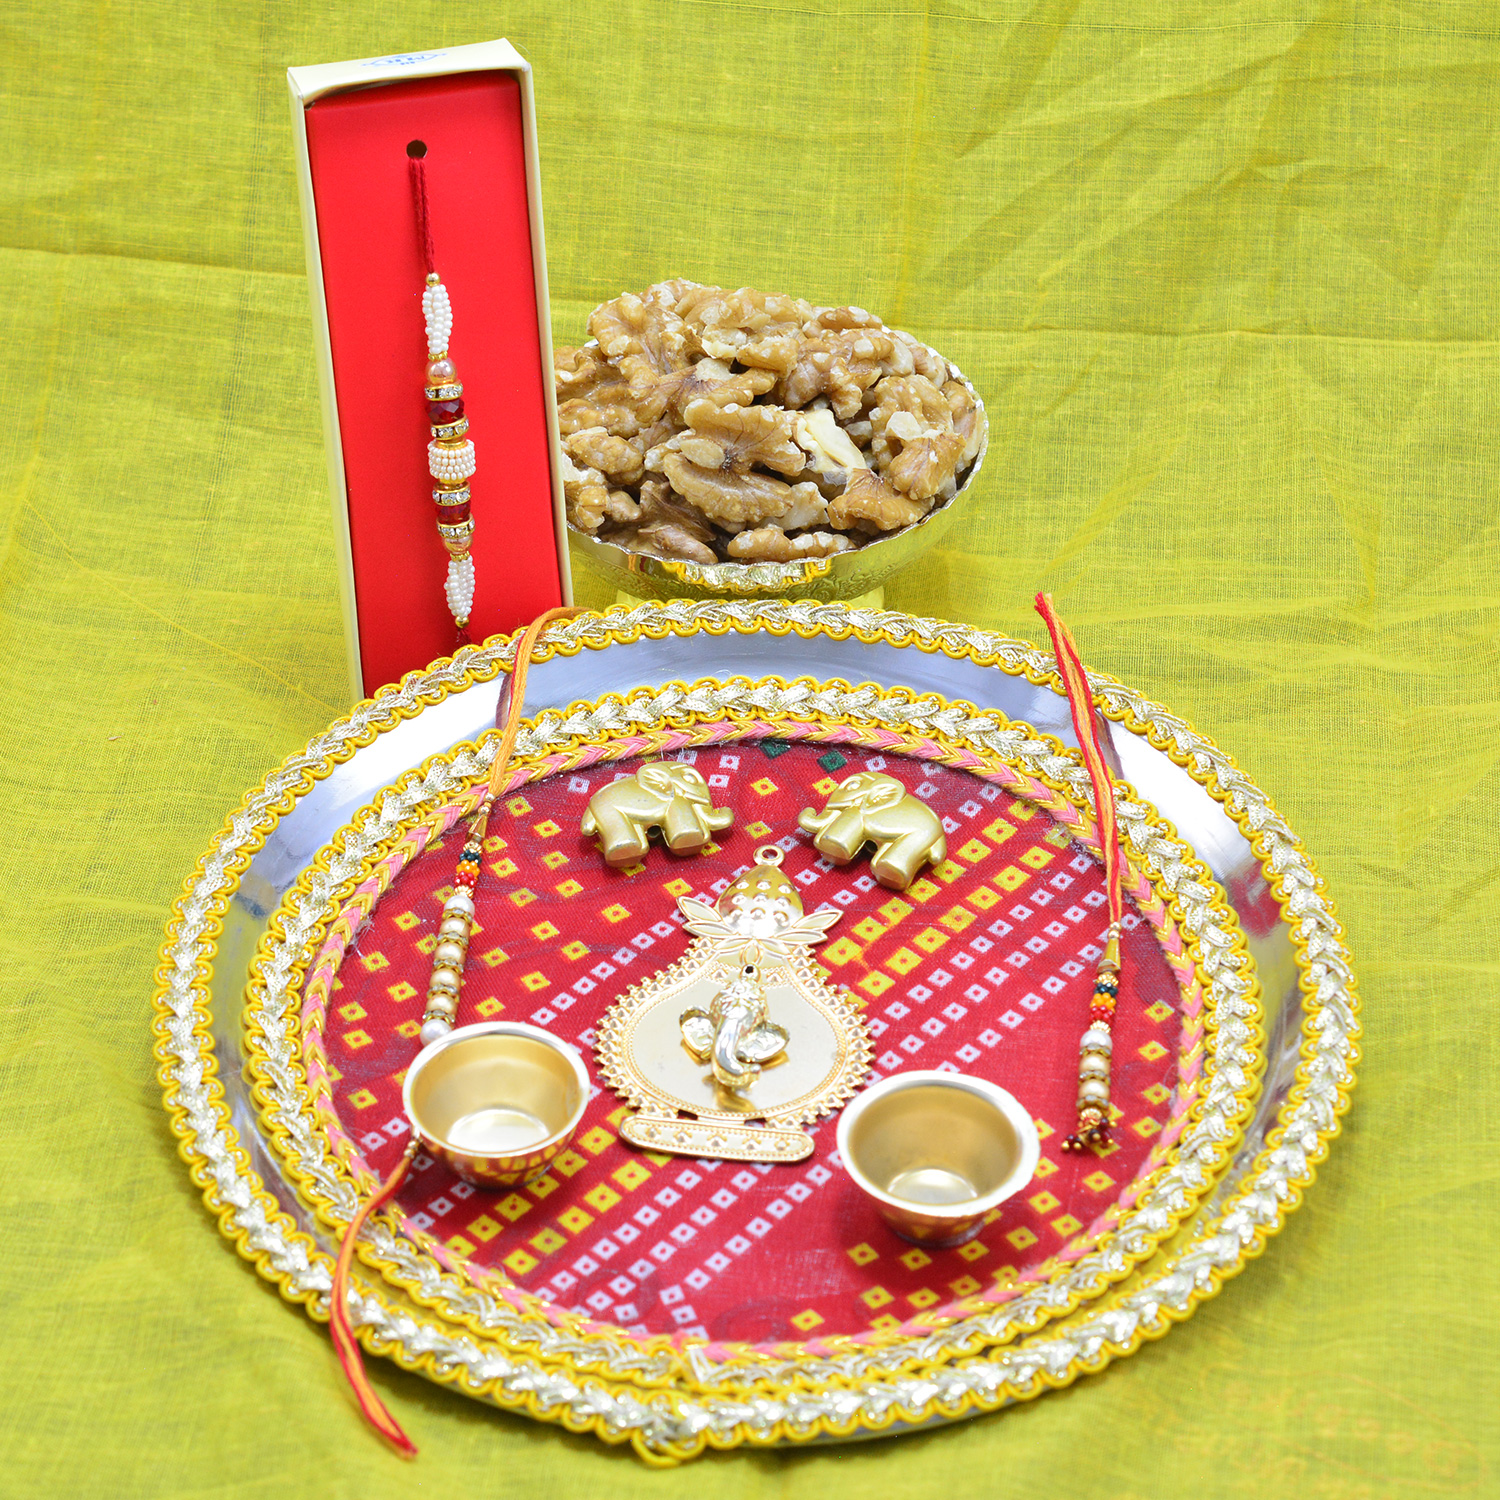 Akhrot Dry Fruits with Special Bhai Thread Rakhis and Rajasthani Design Rakhi Pooja Thali